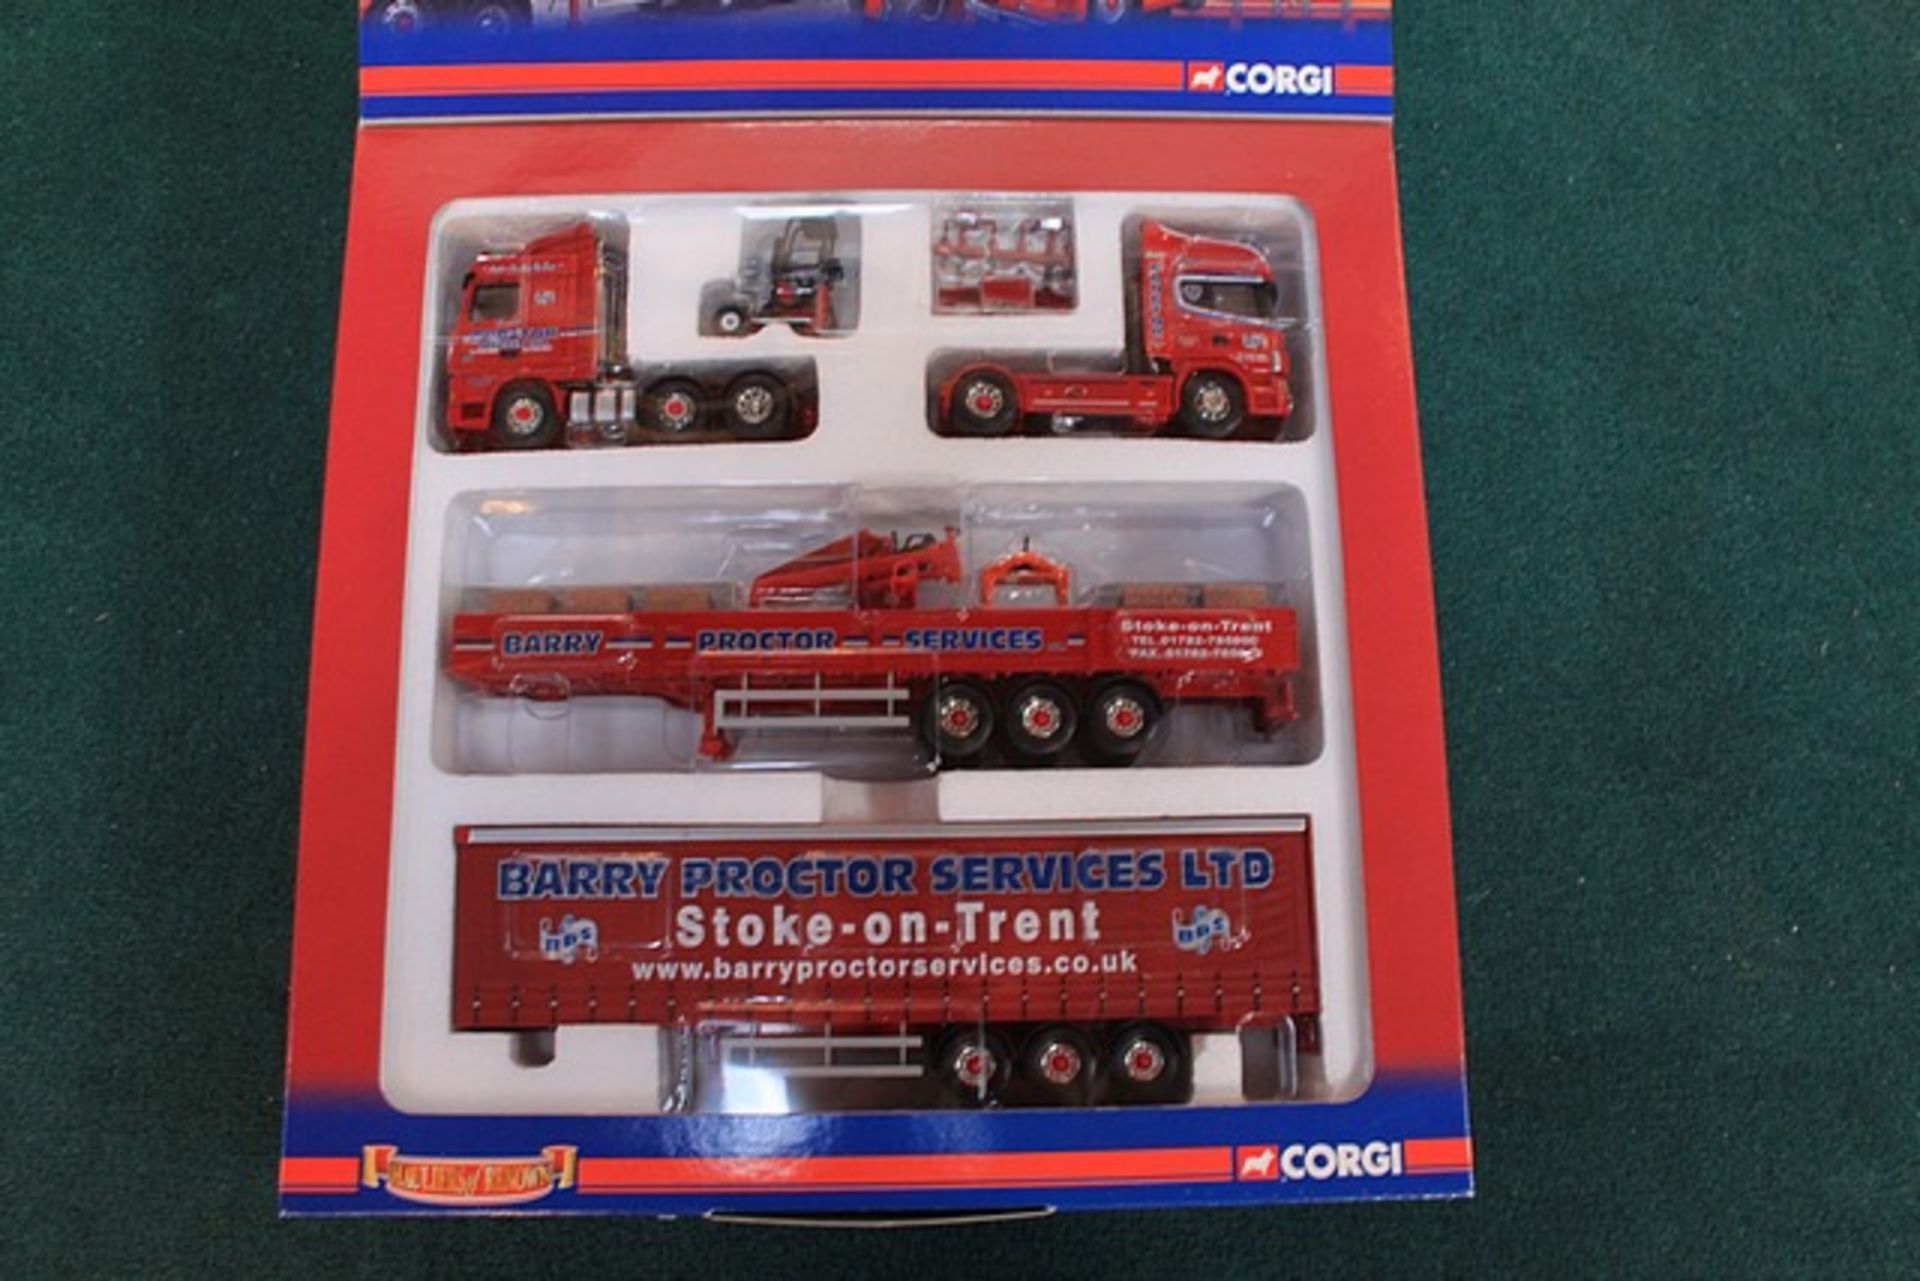 CORGI #CC99169 Limited Edition Barry Proctor Set 1/50 Scale The Set -- Scania Topline Sided Crane